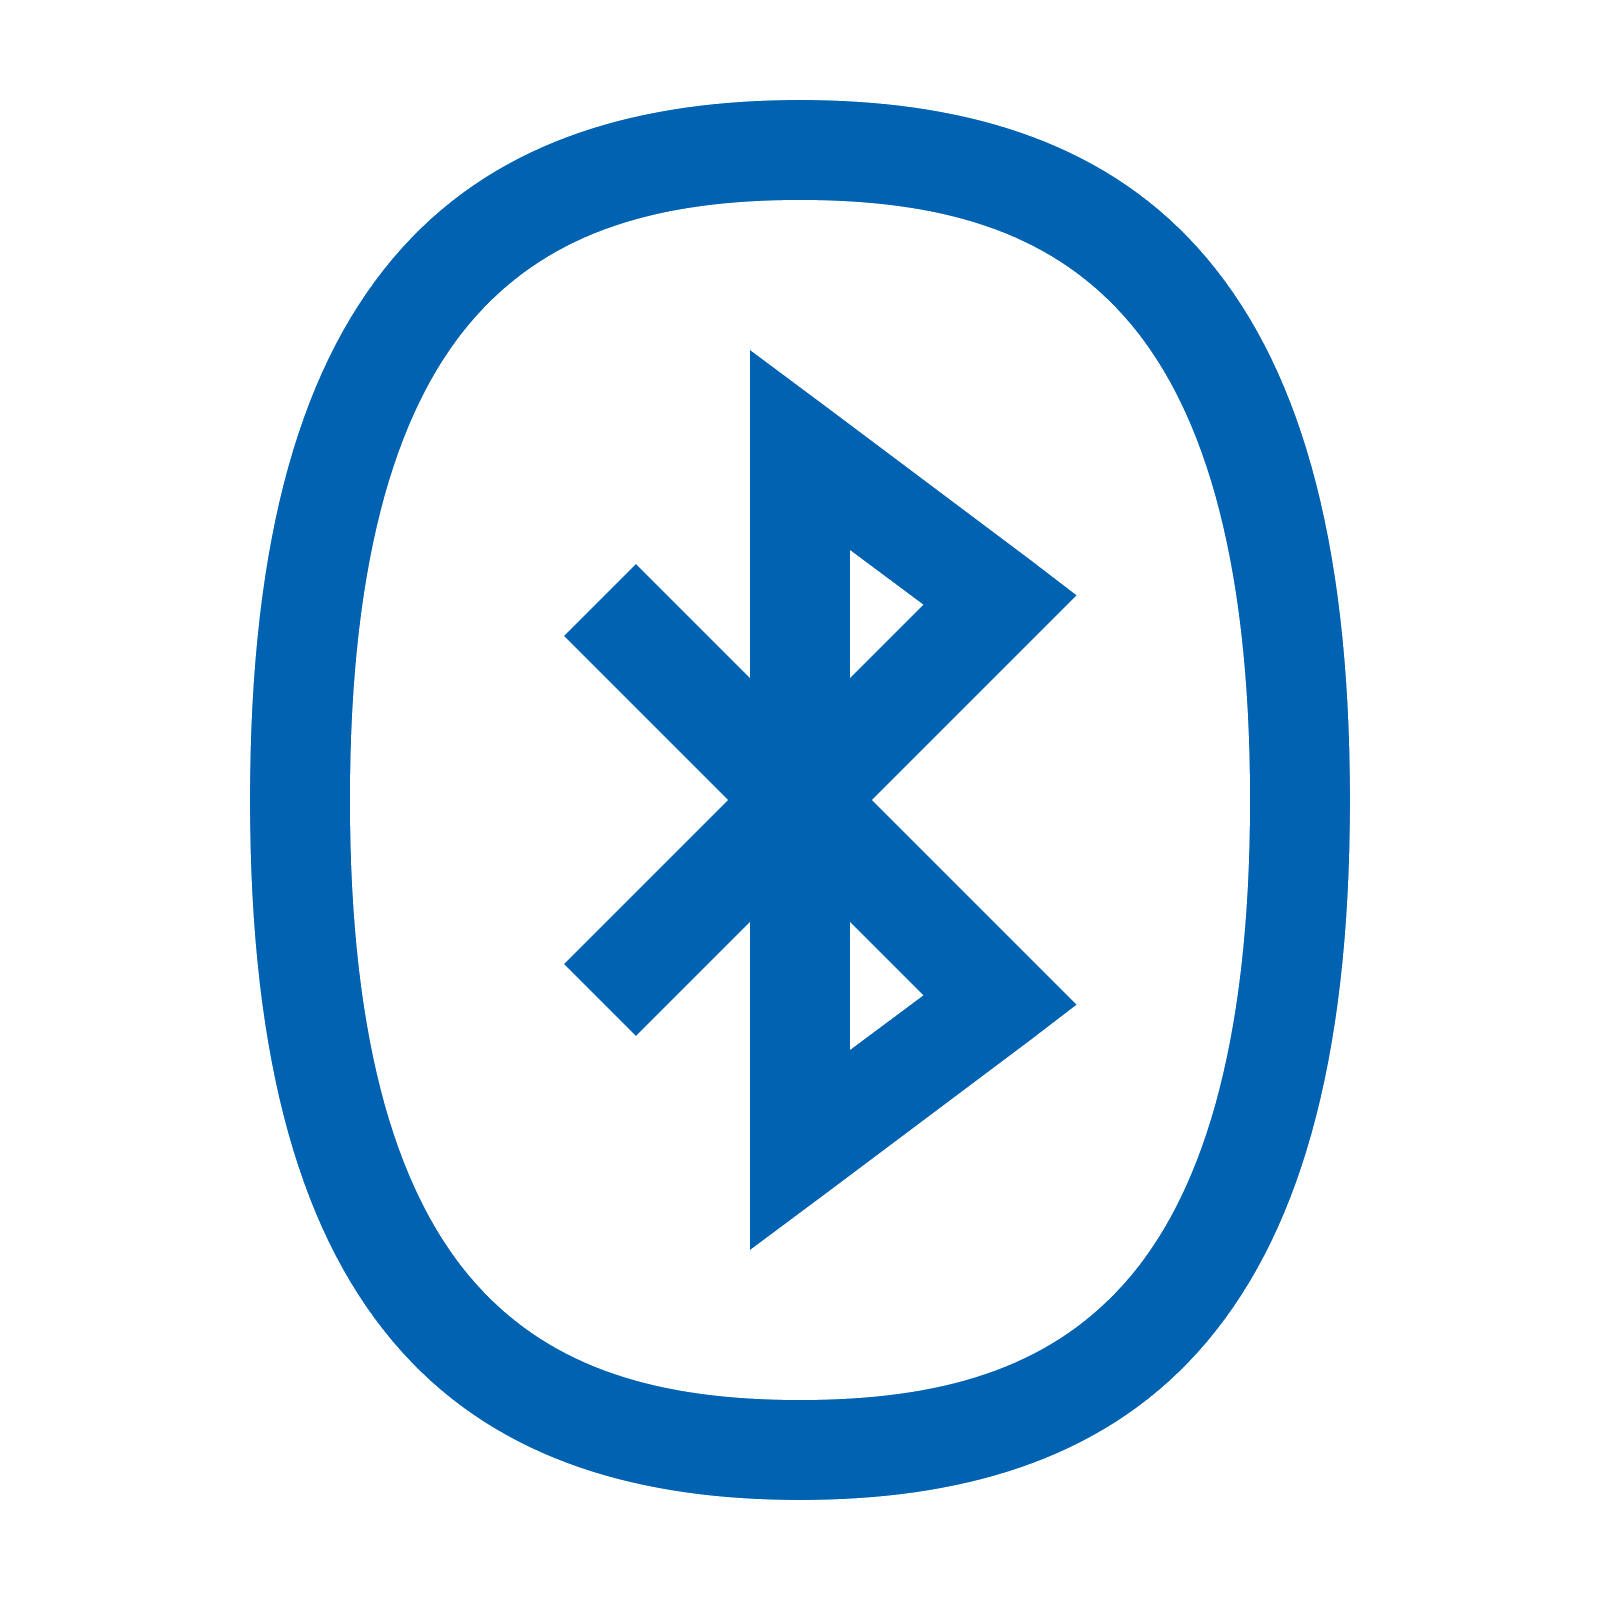 Bluetooth logo PNG